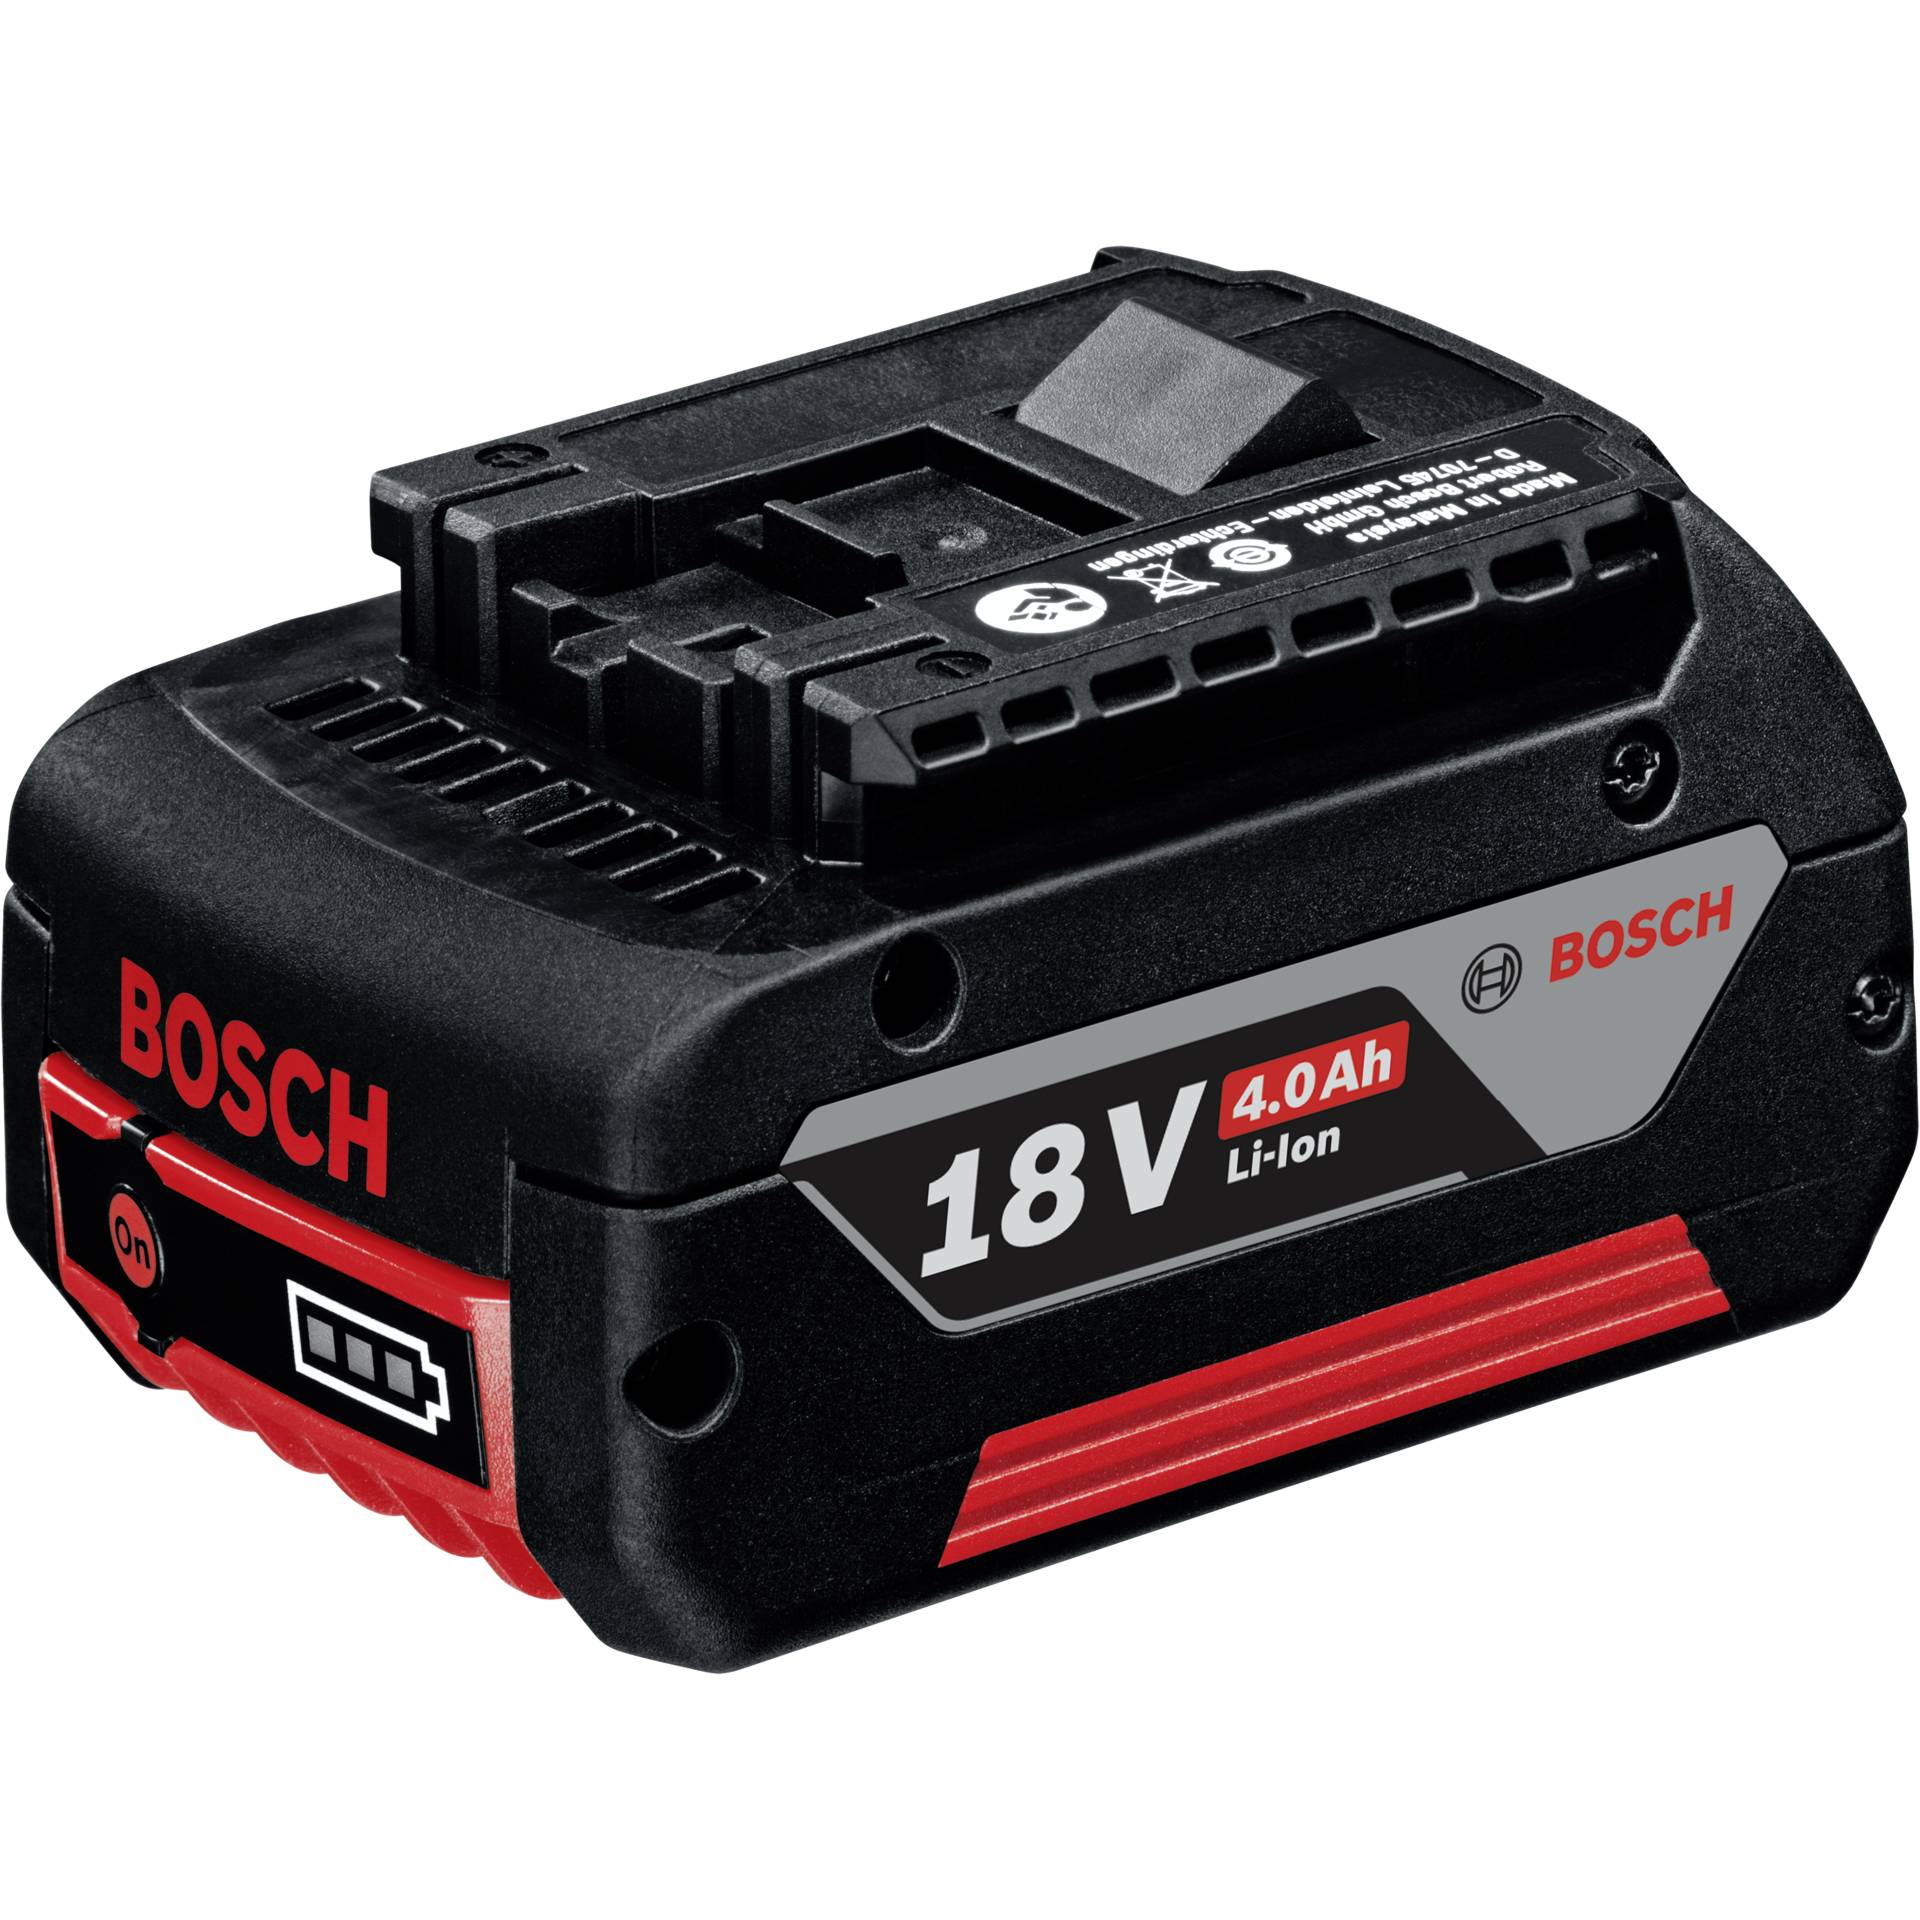 Bosch Professional Werkzeug-Akku 18V, 4.0Ah, Li-Ionen bulk